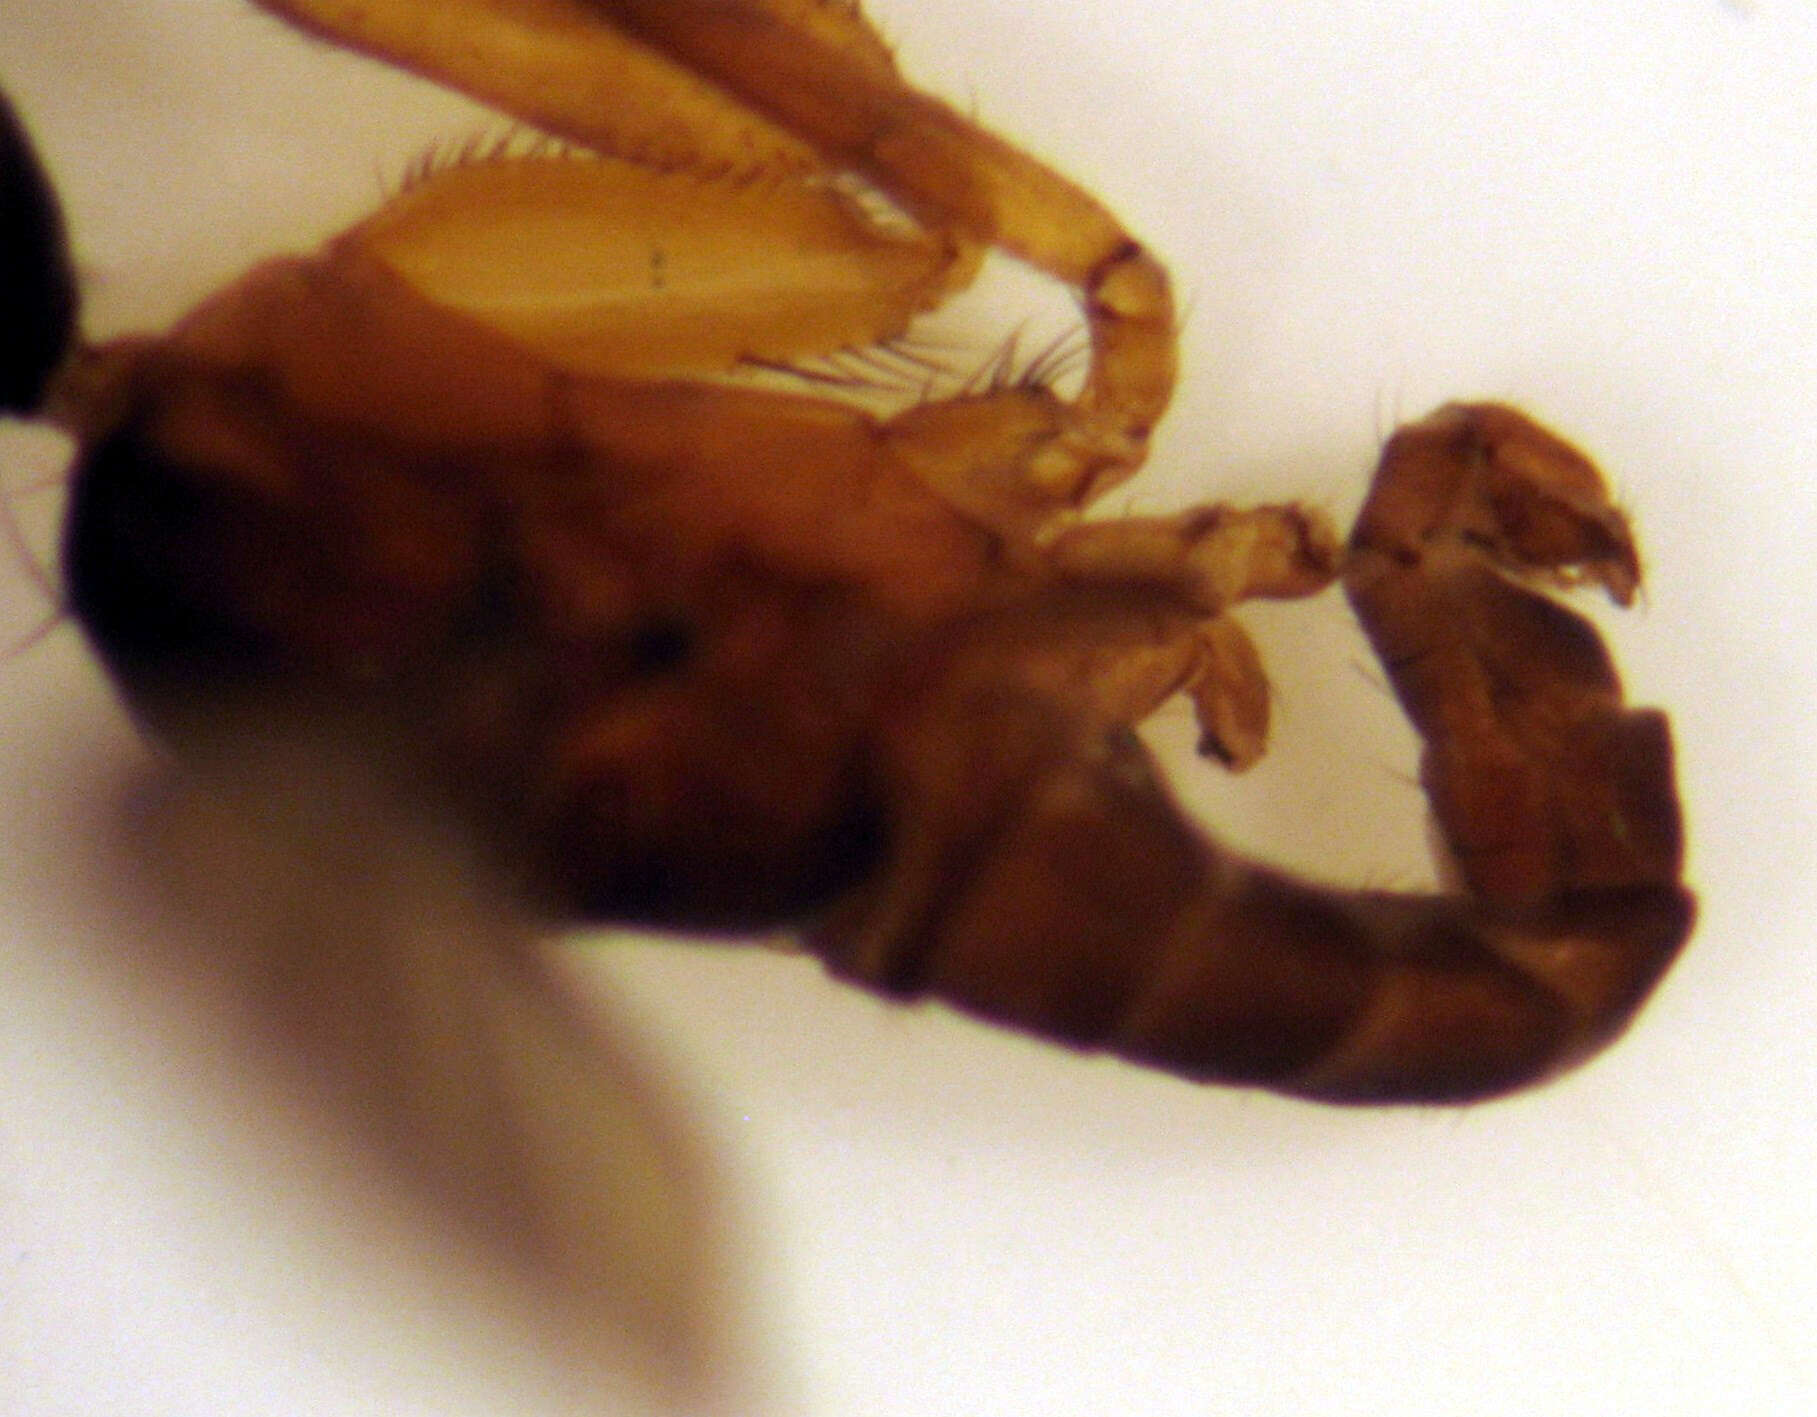 Image of Ceratomerus crassinervis Malloch 1931